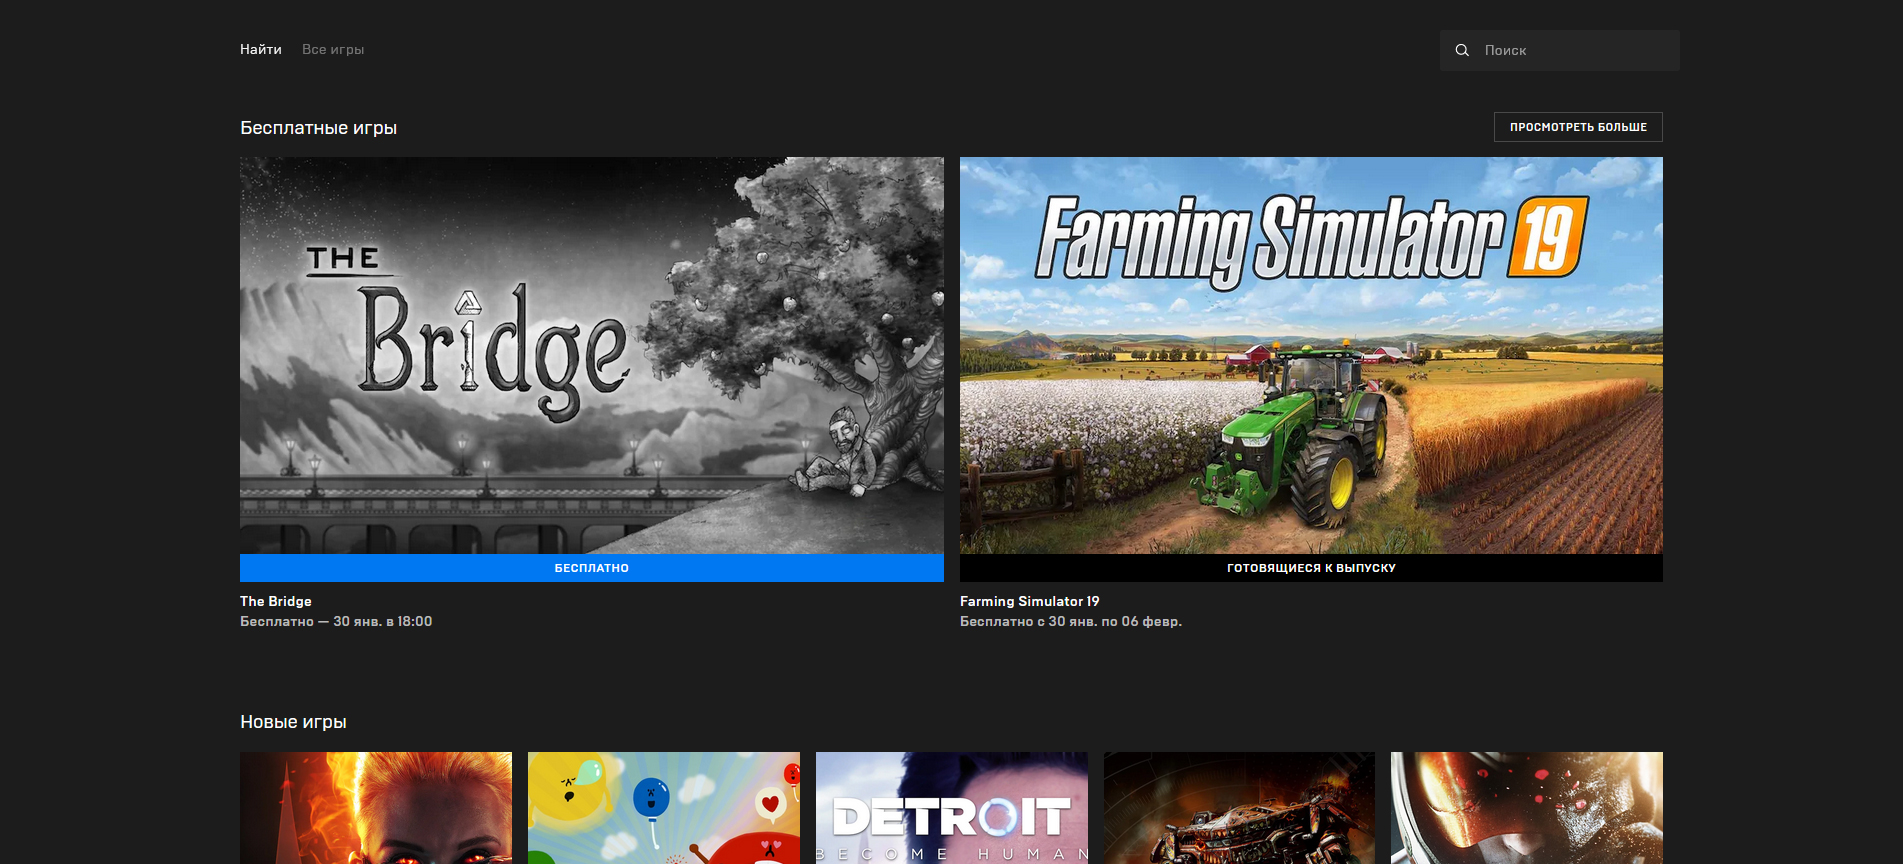 Epic Games Store: началась раздача The Bridge, следующая — Farming Simulator 19 (фото)